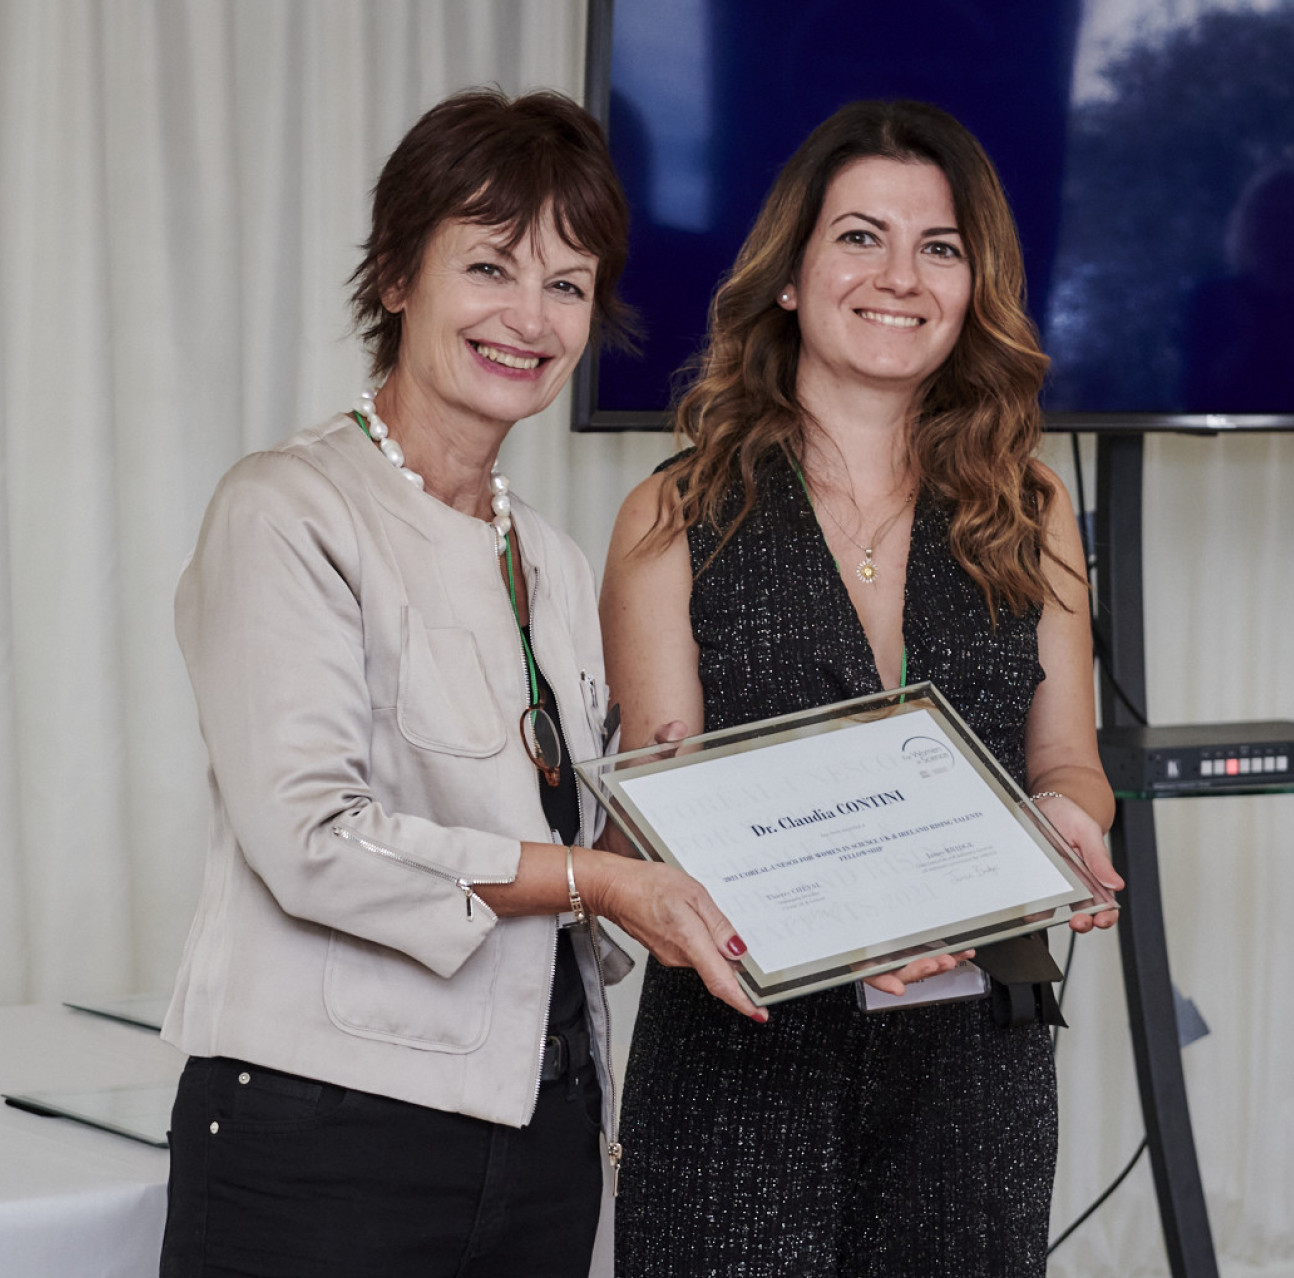 Claudia Contini receiving her award